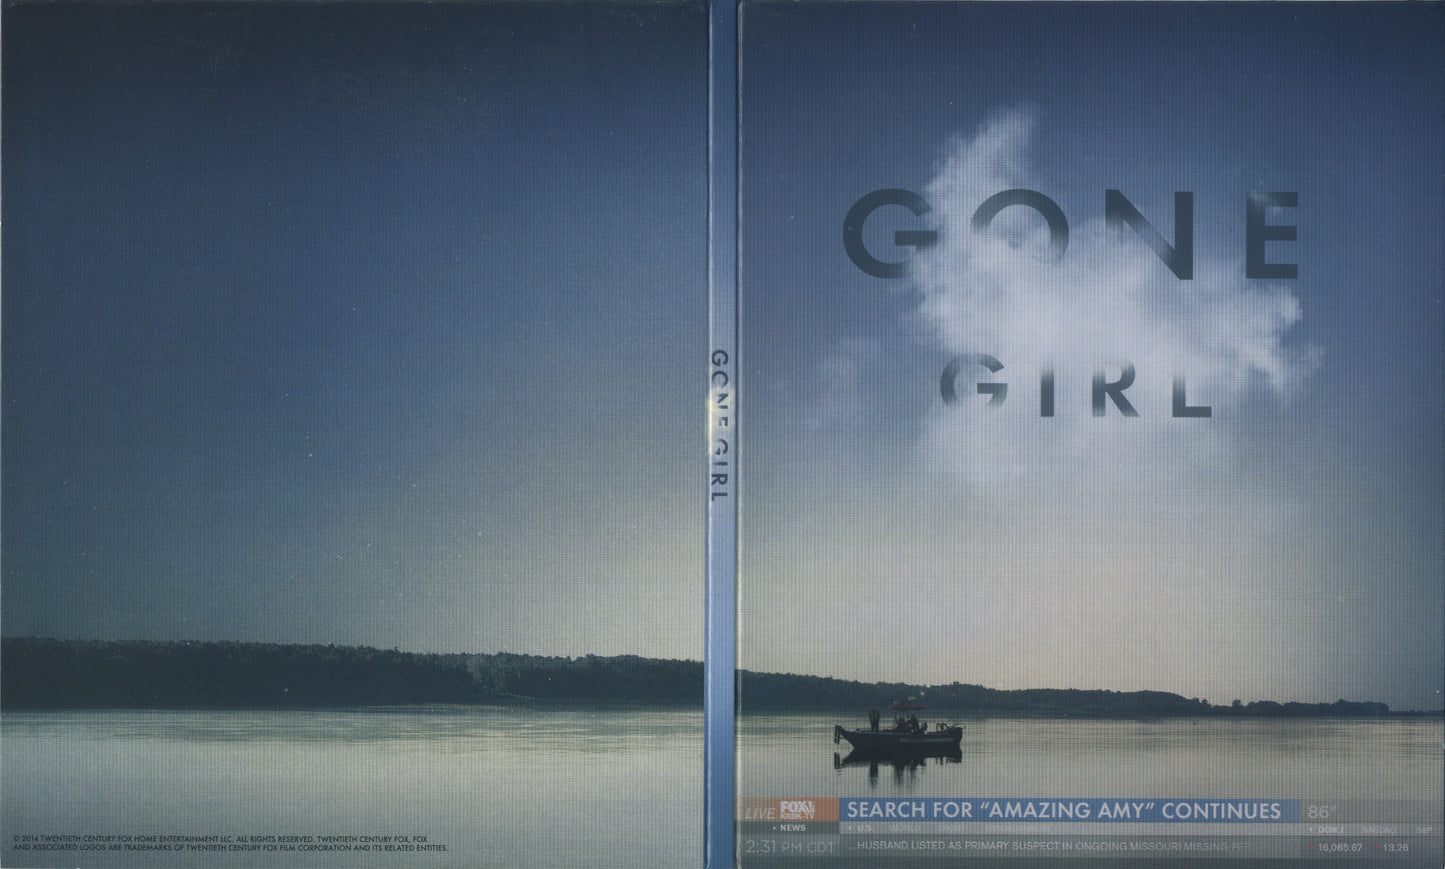 Gone Girl - Blu-ray Drama 2014 R